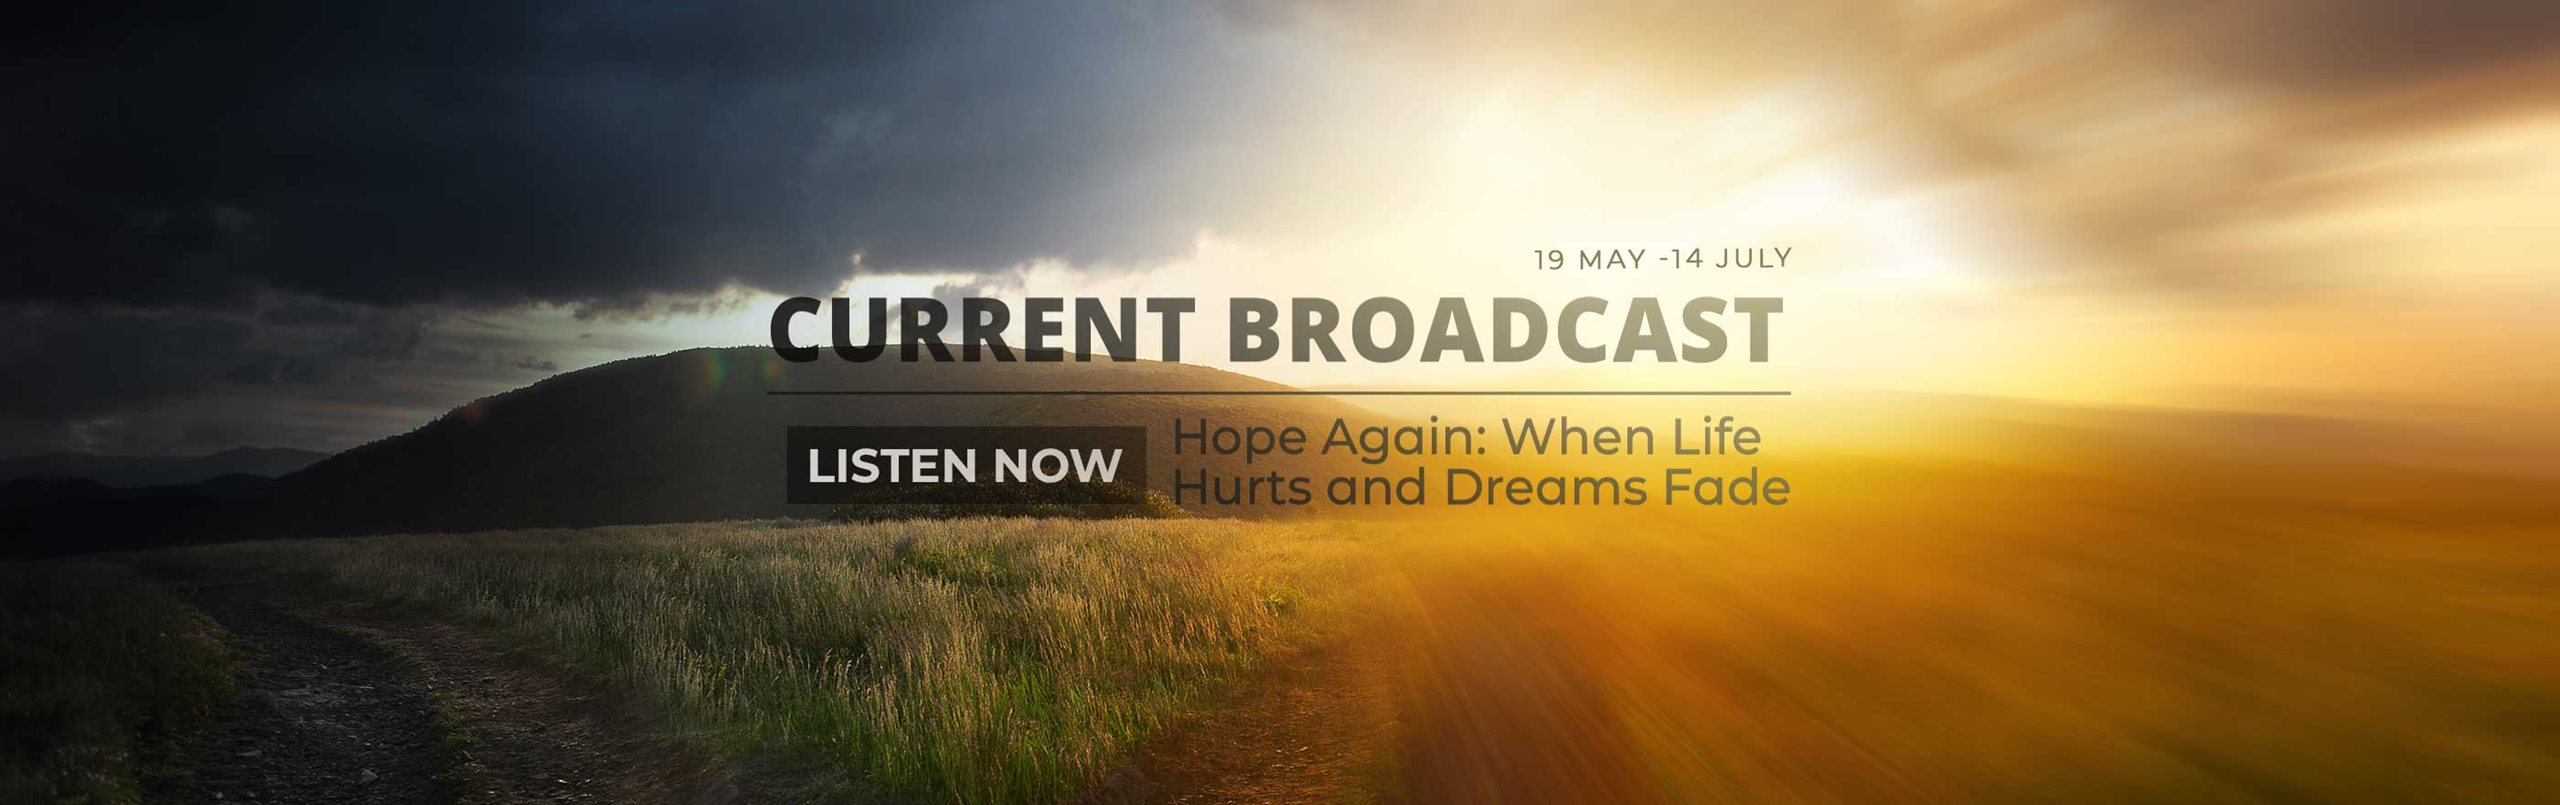 Current Broadcast - Hope Again